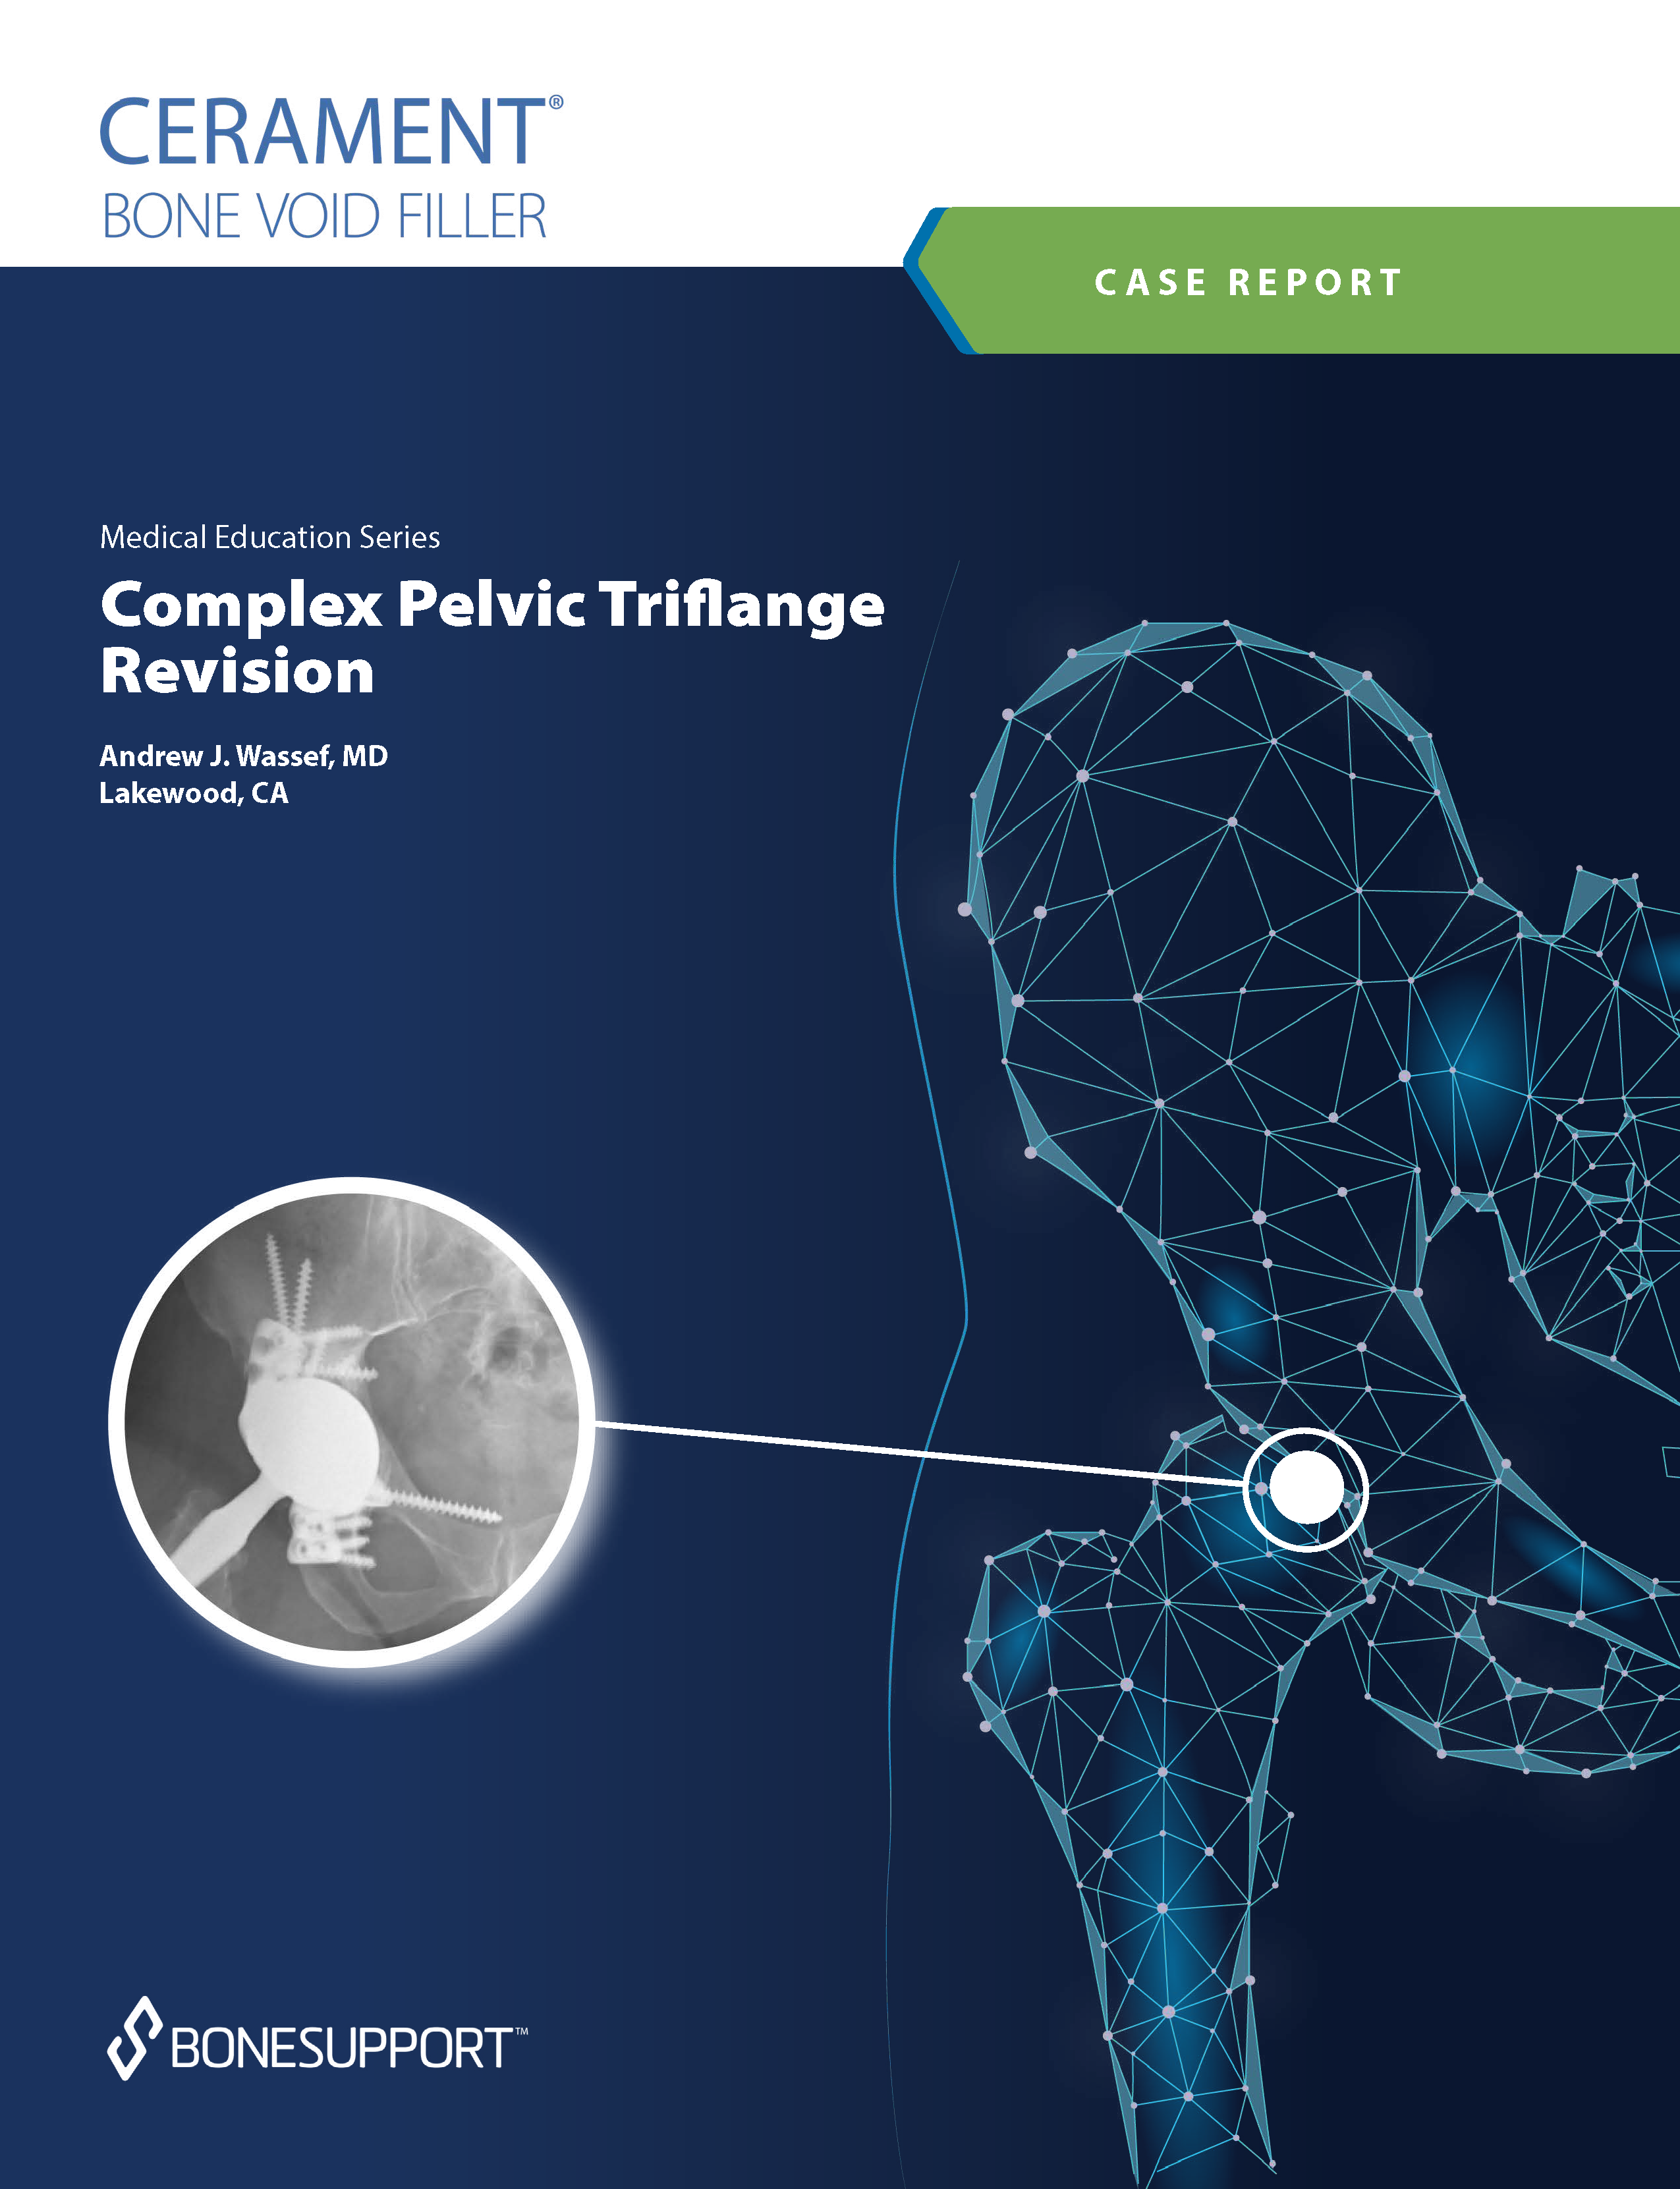 Complex Pelvic Triflange Revision